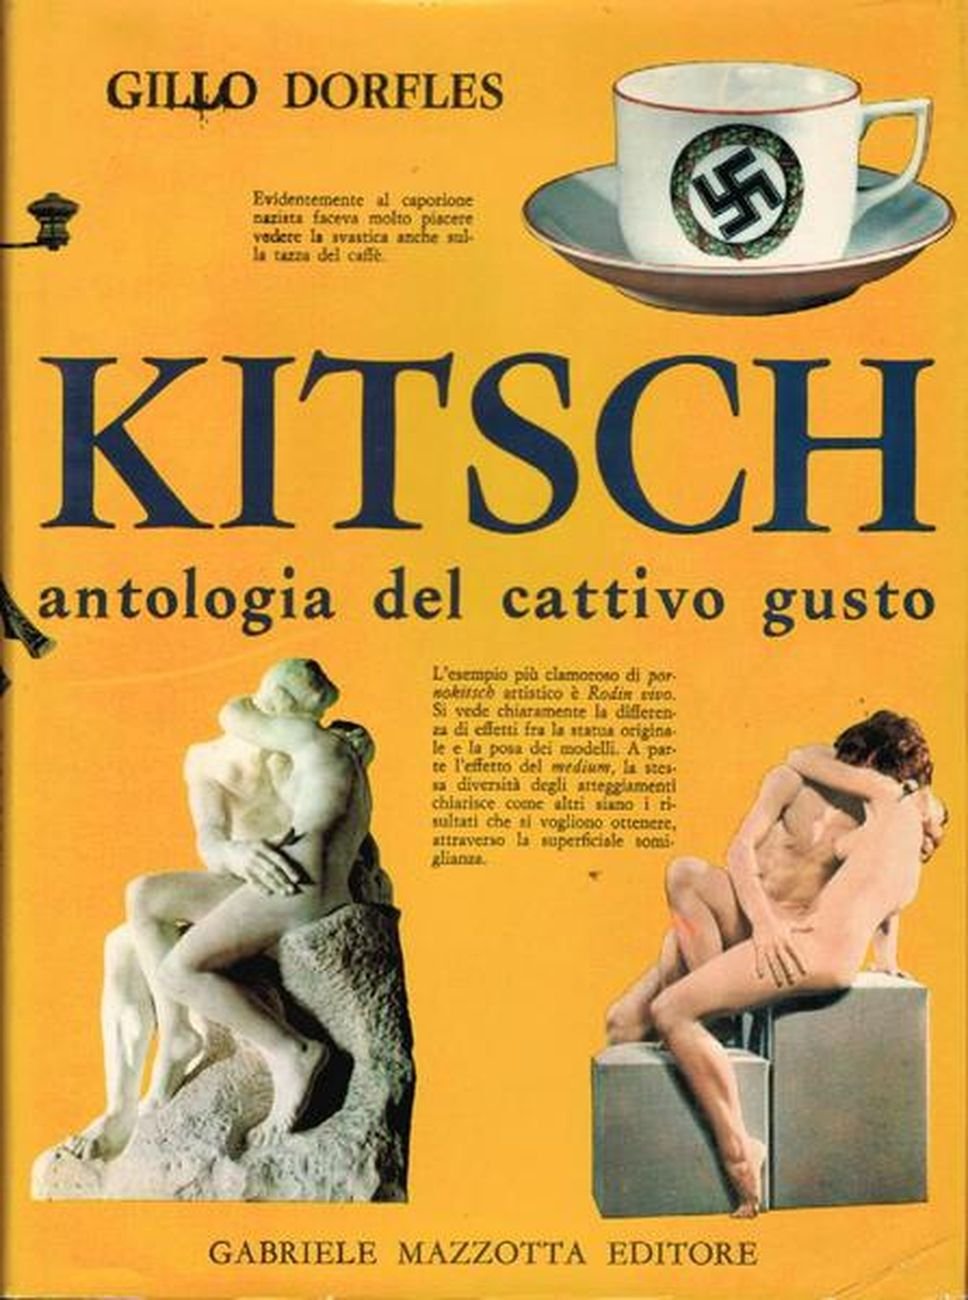 Gillo Dorfles, Kitsch. Antologia del cattivo gusto (Mazzotta, Milano 1968)